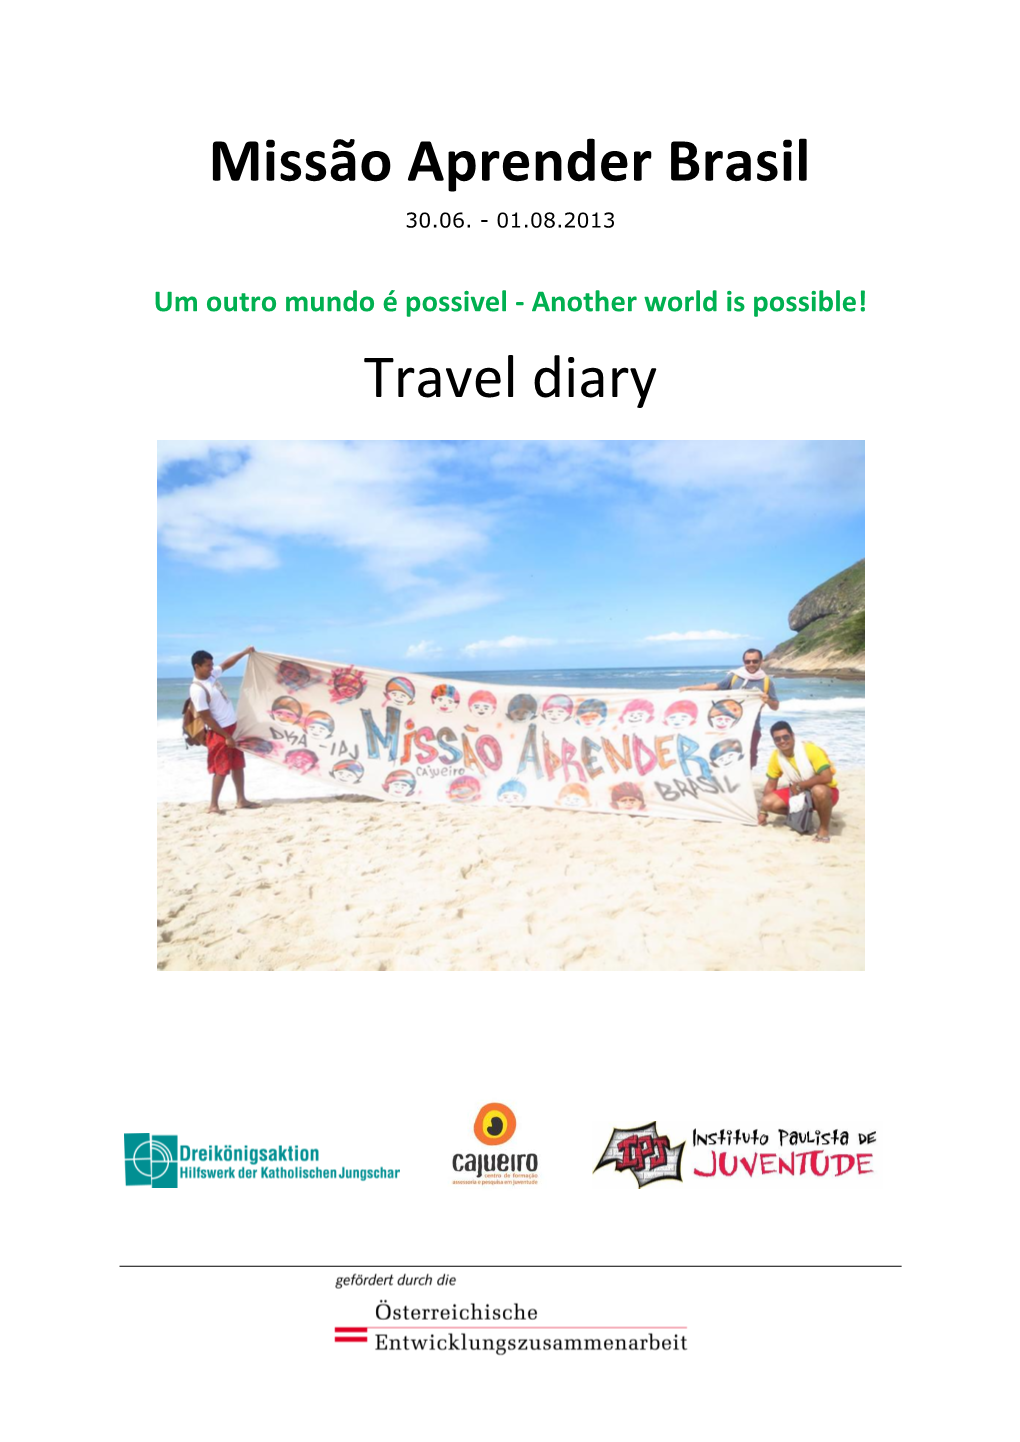 Missão Aprender Brasil Travel Diary